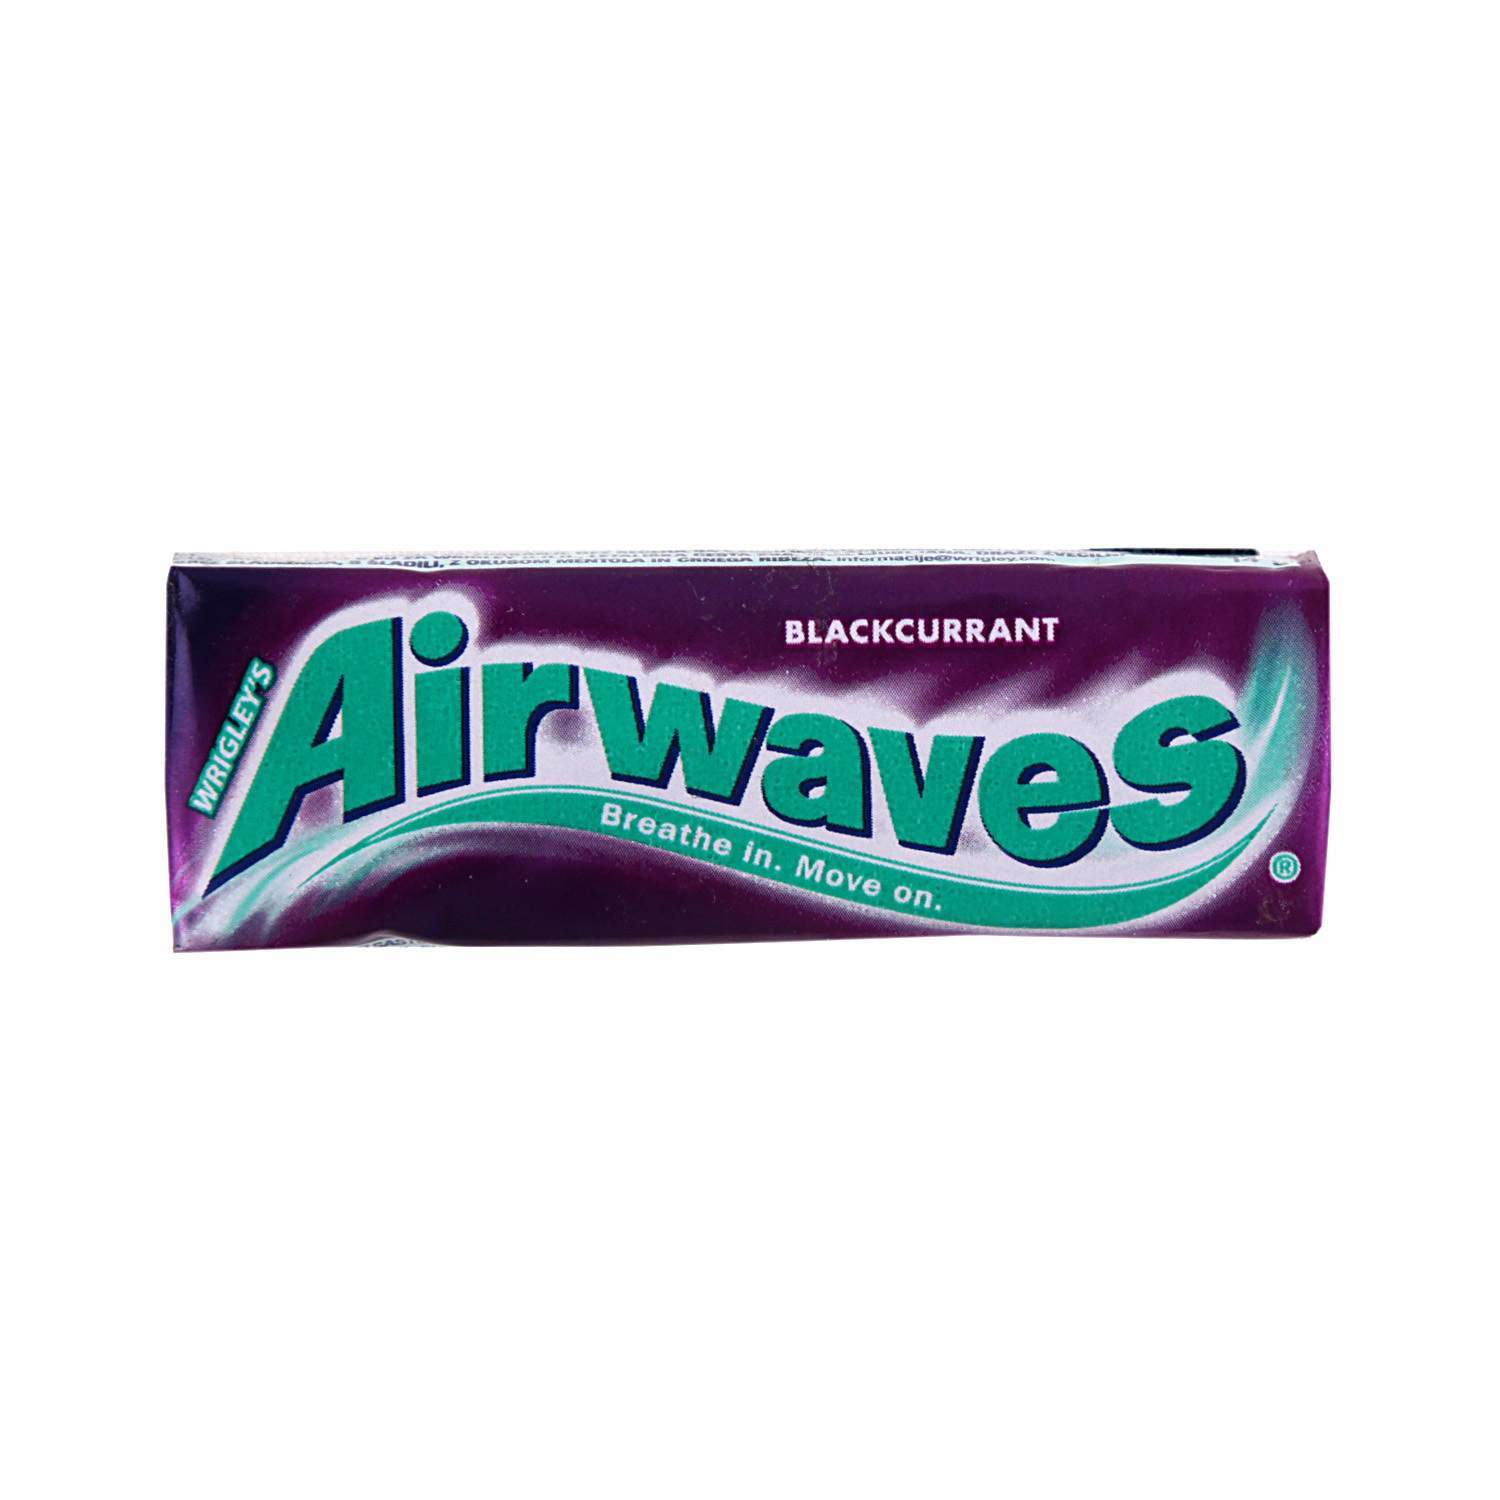 Airwaves Blackcurrant Chewing Gum 14 G Yss Yacht Supply Split